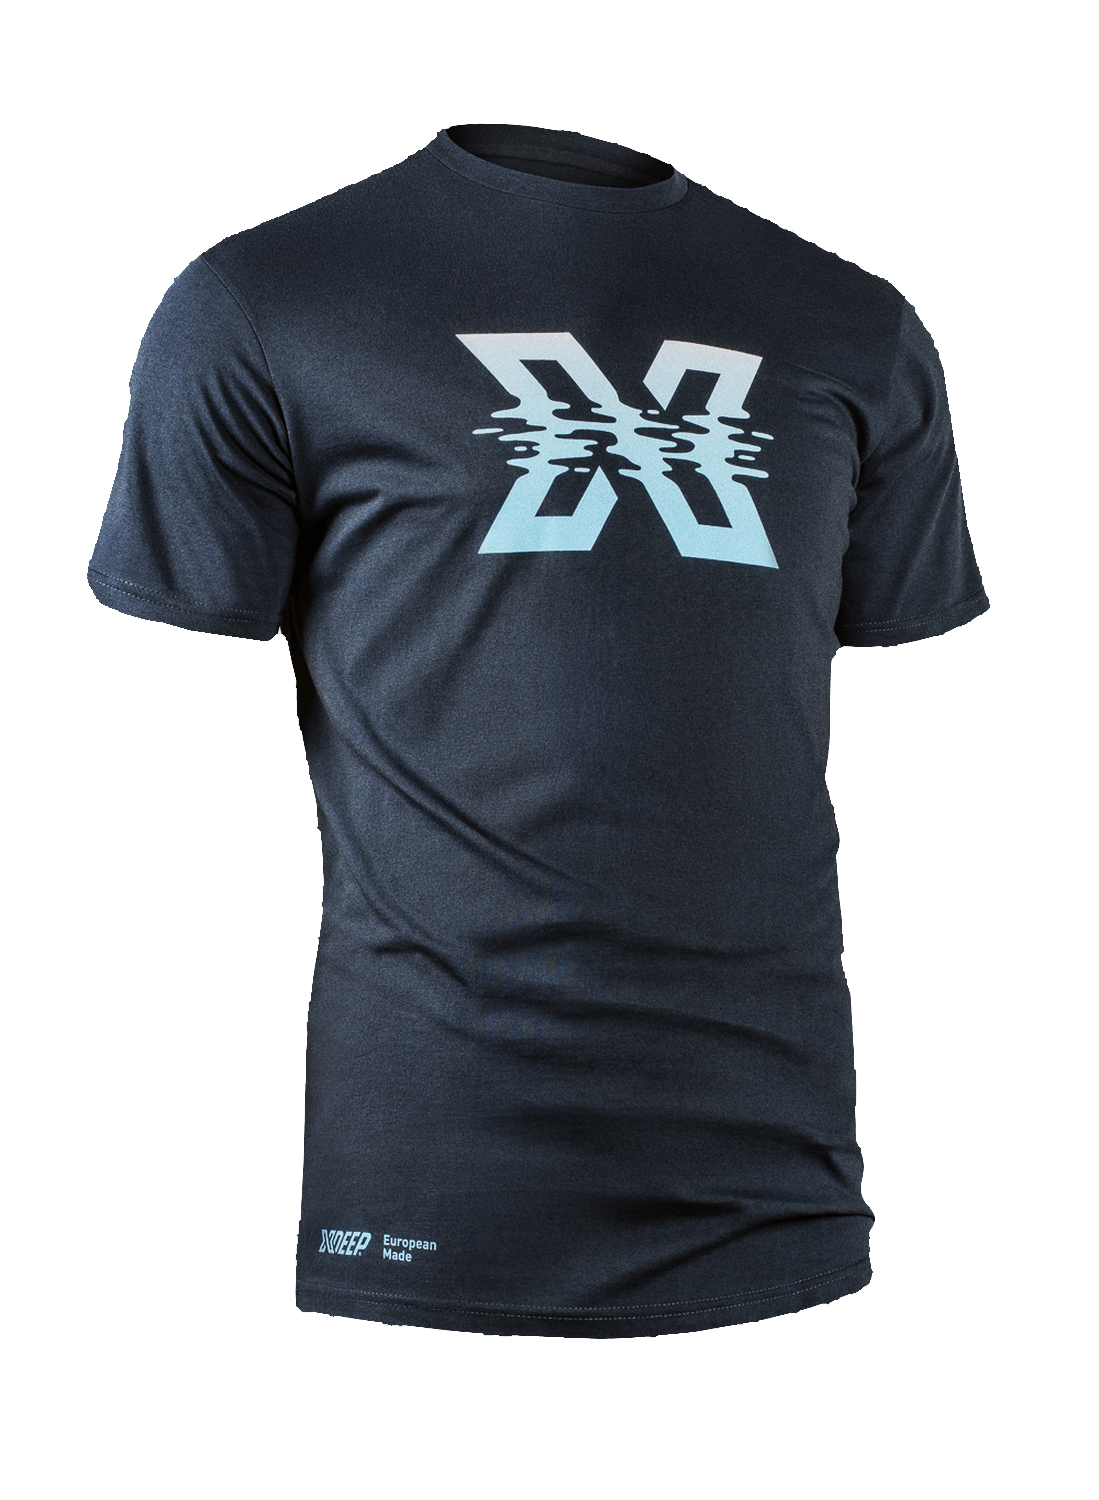 XDEEP XDEEP Wavy X T-Shirt Small - Oyster Diving